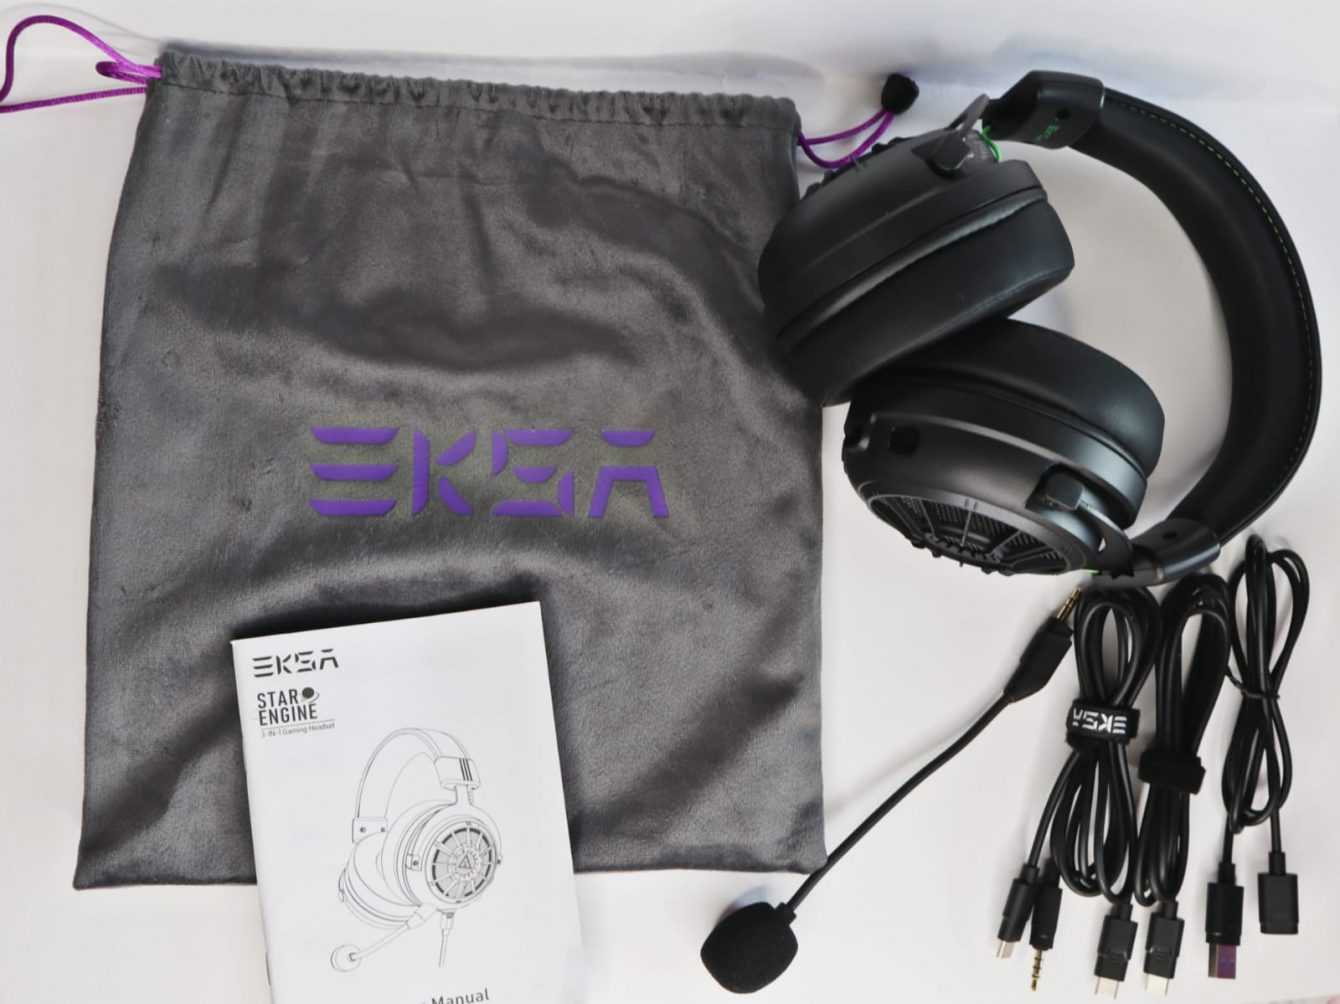 EKSA E5000 Pro review: Star Engine gaming headset